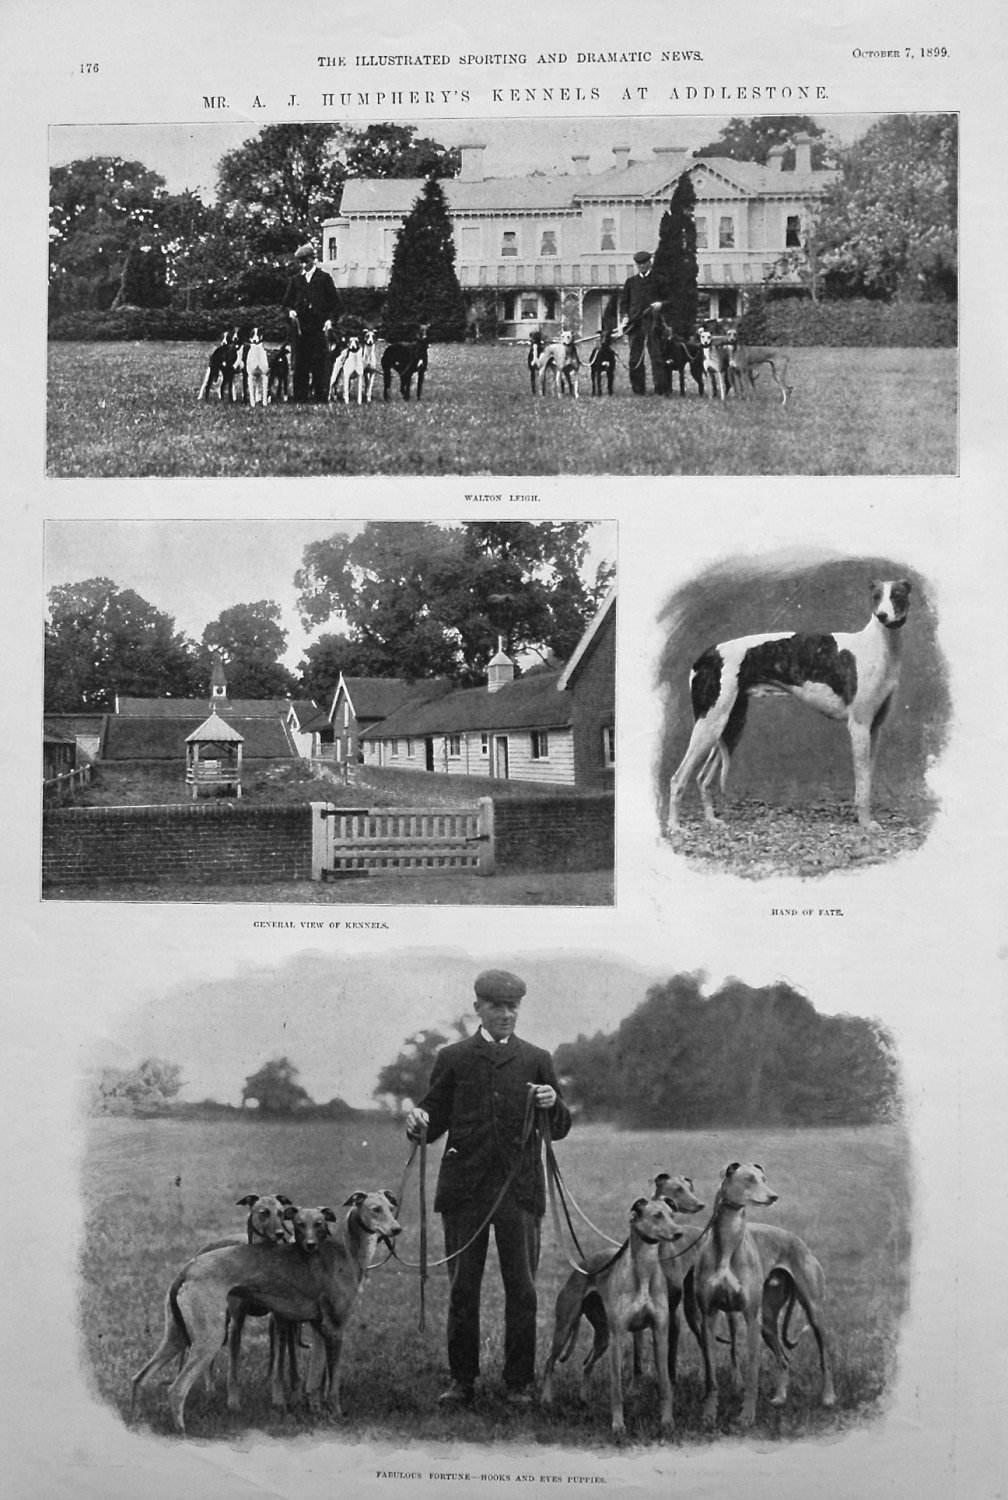 Mr. A.J. Humphery's Kennels at Addlestone. 1899